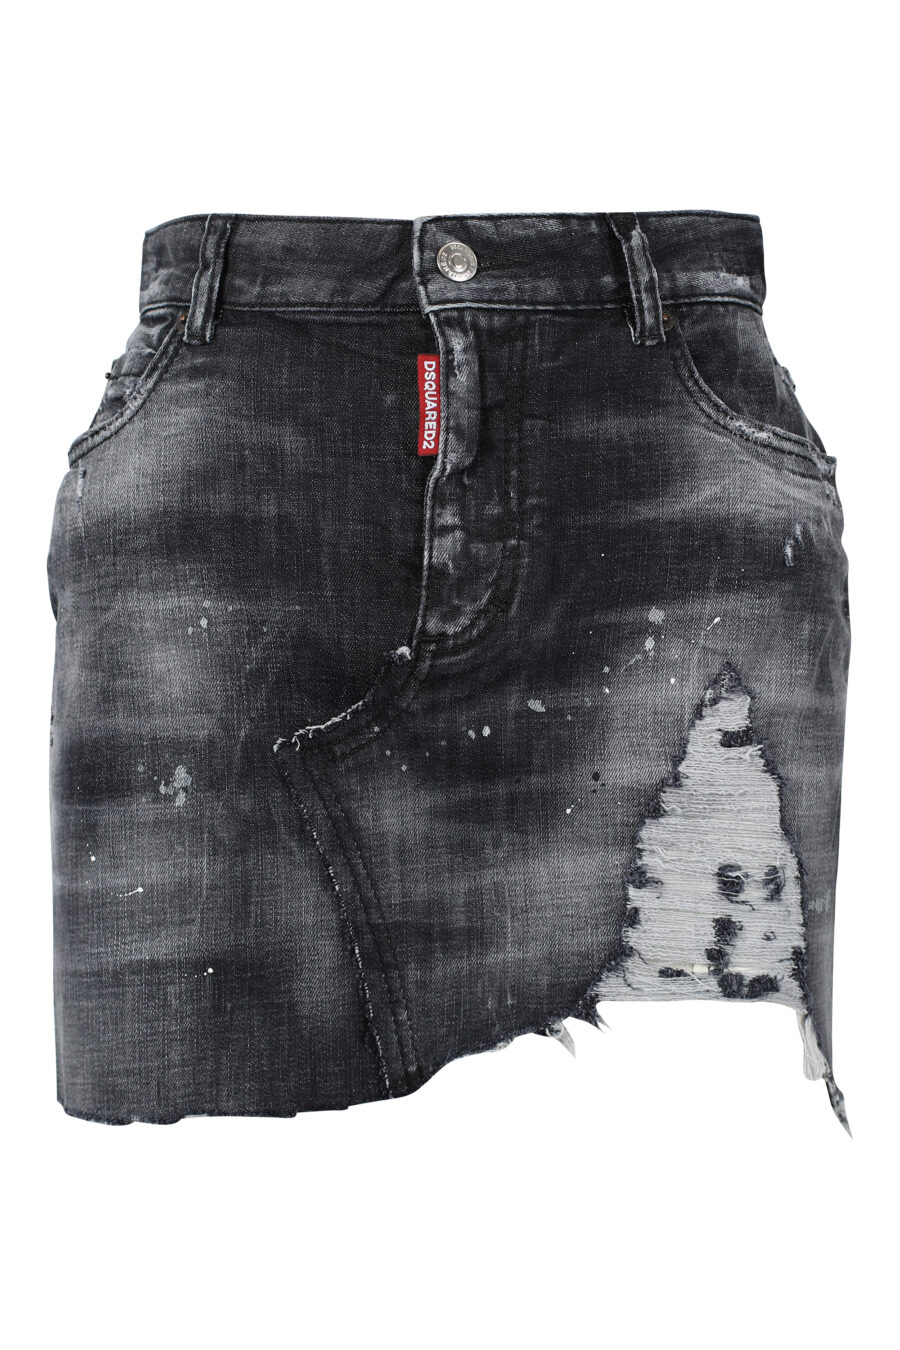 Black raw cut mini skirt with half slit - IMG 9795